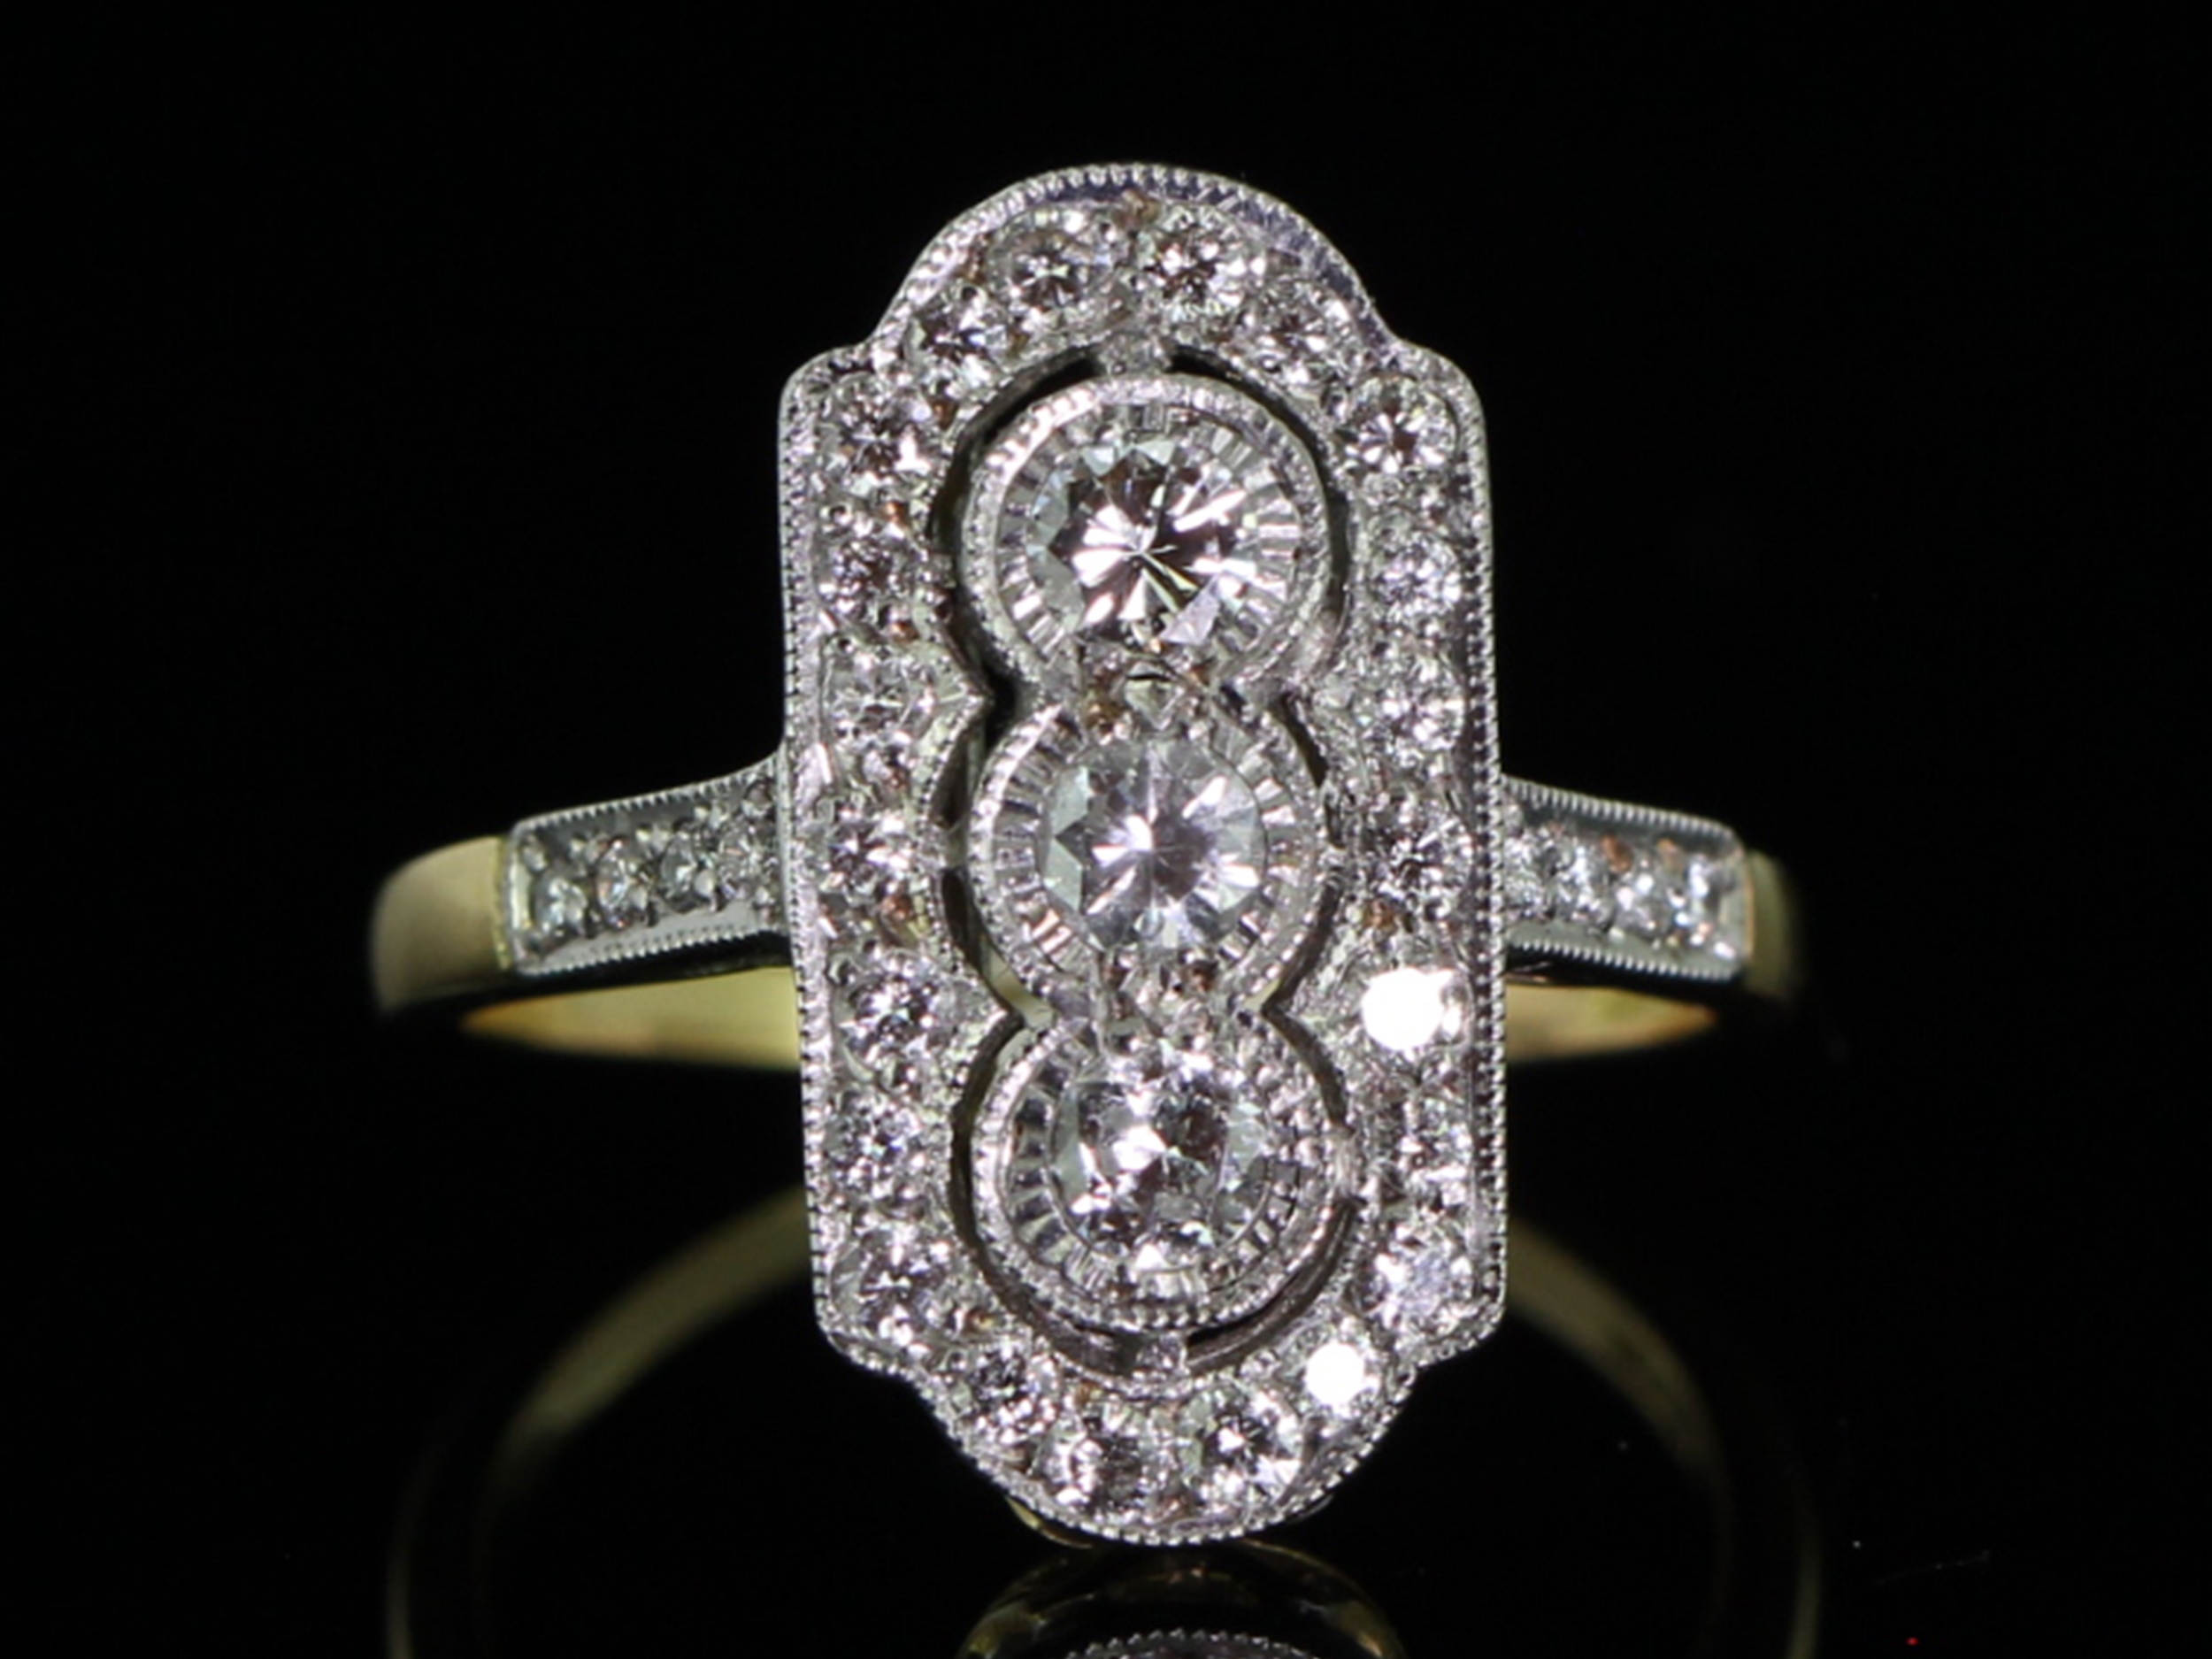 Stunning 18 carat gold diamond plaque ring